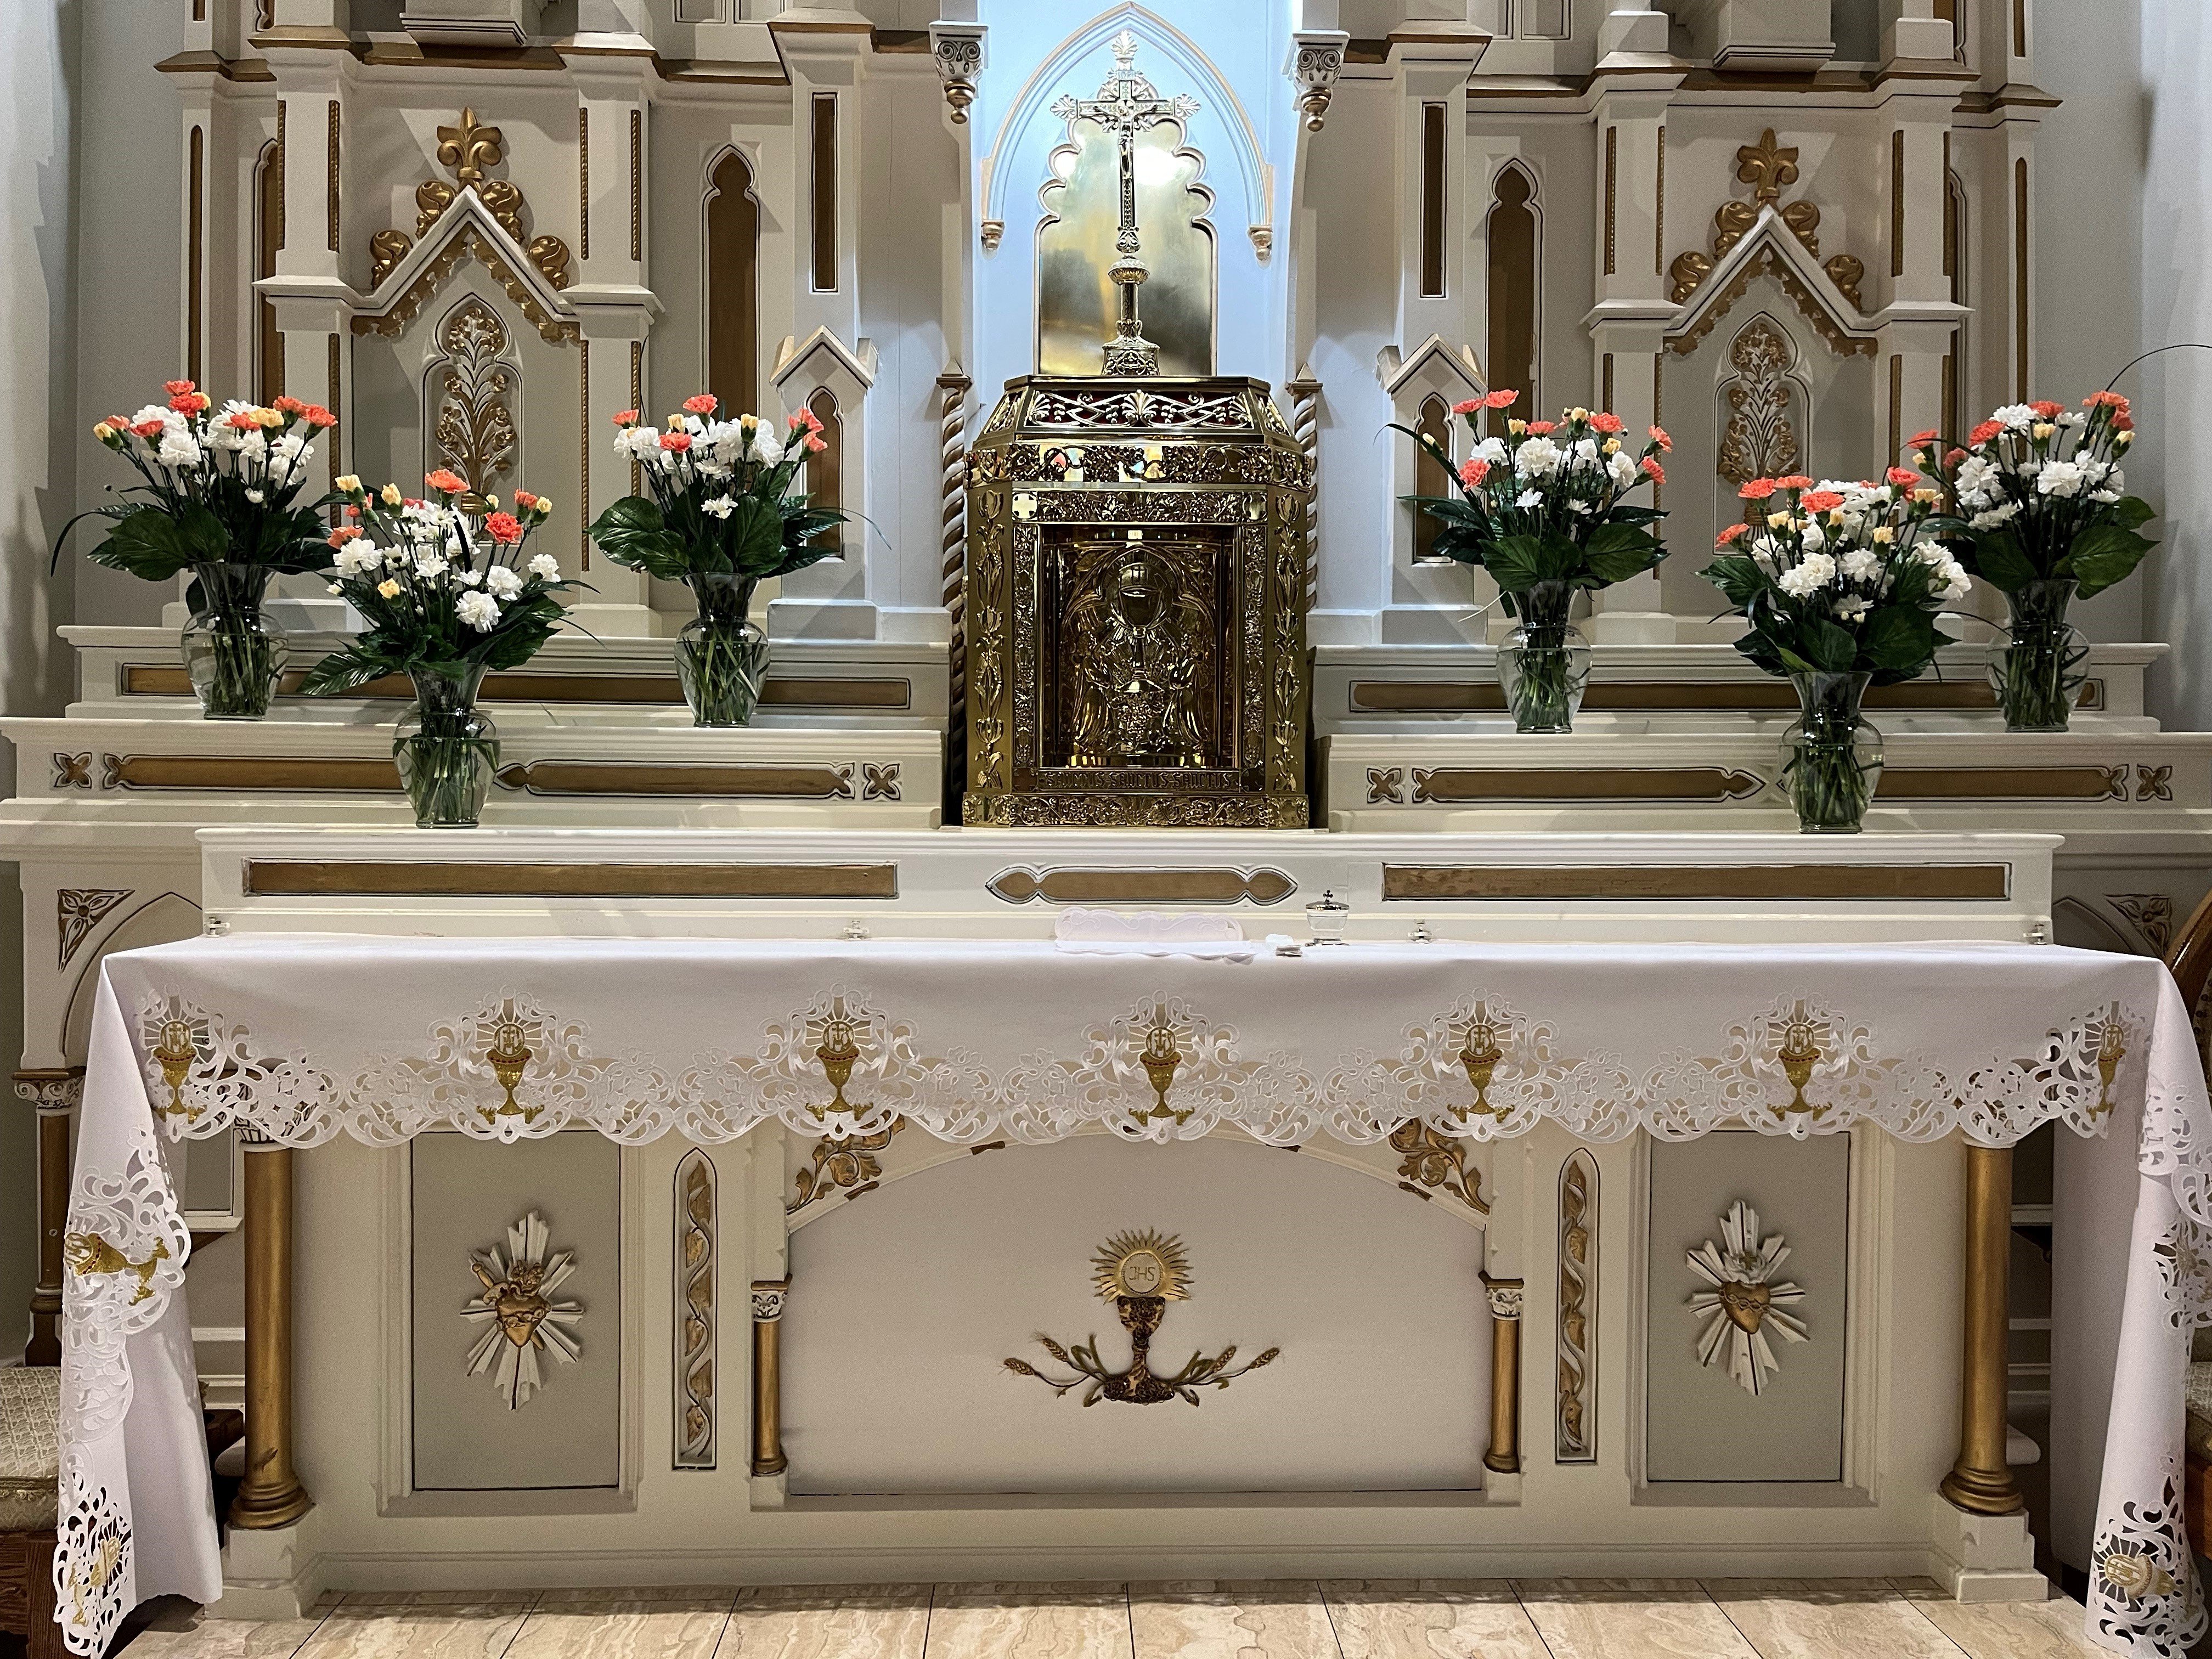 Altar decorated for Corpus Christi